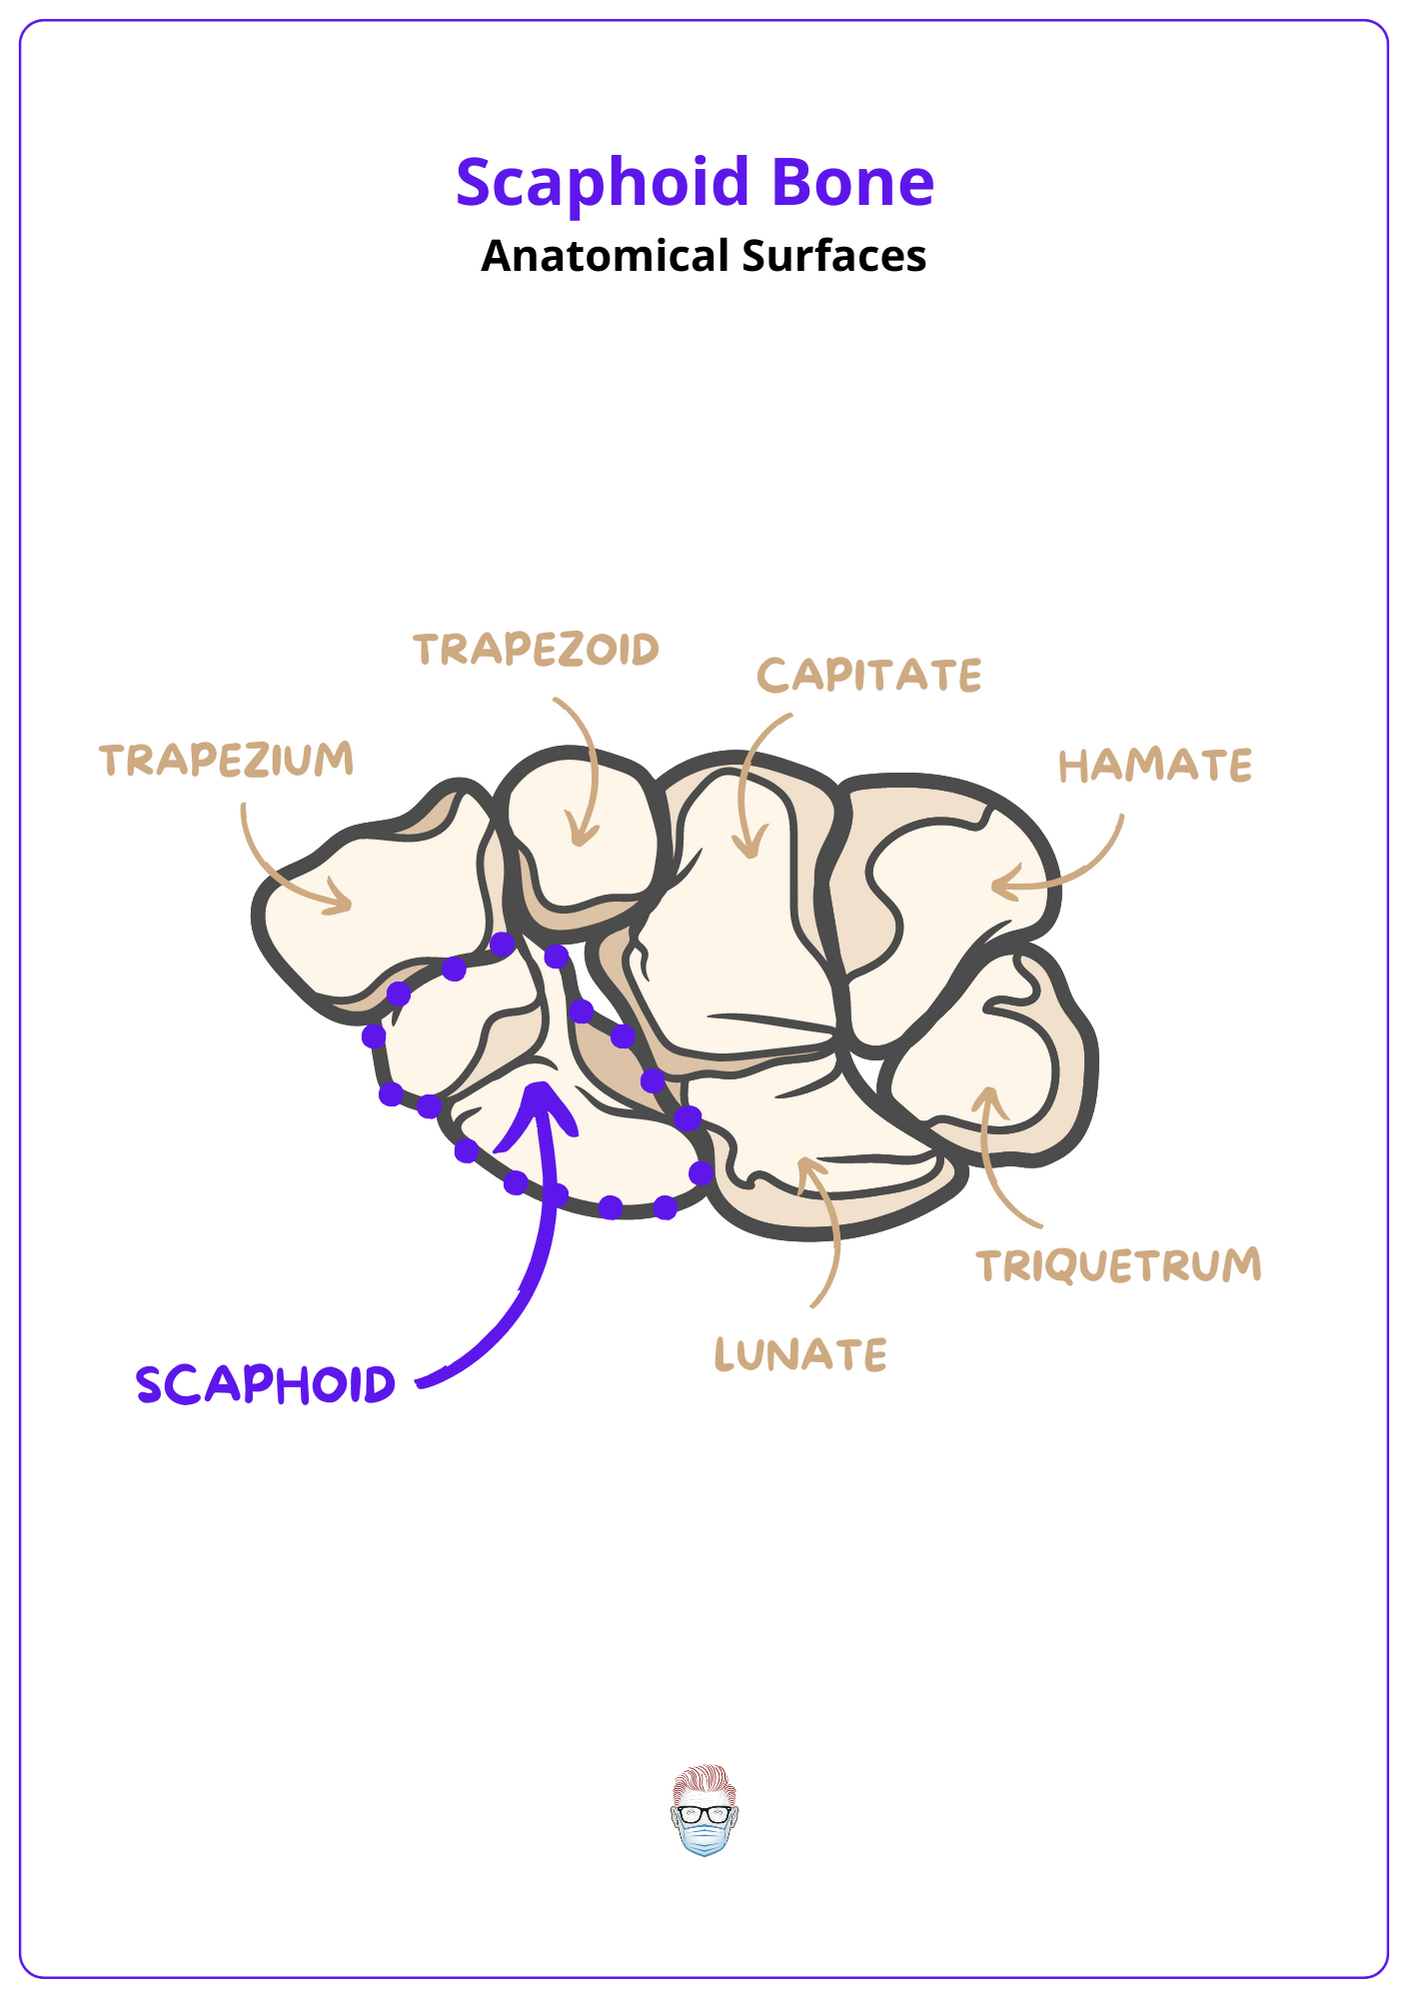 Location of the Scaphoid Bone, Scaphoid Bone Anatomy